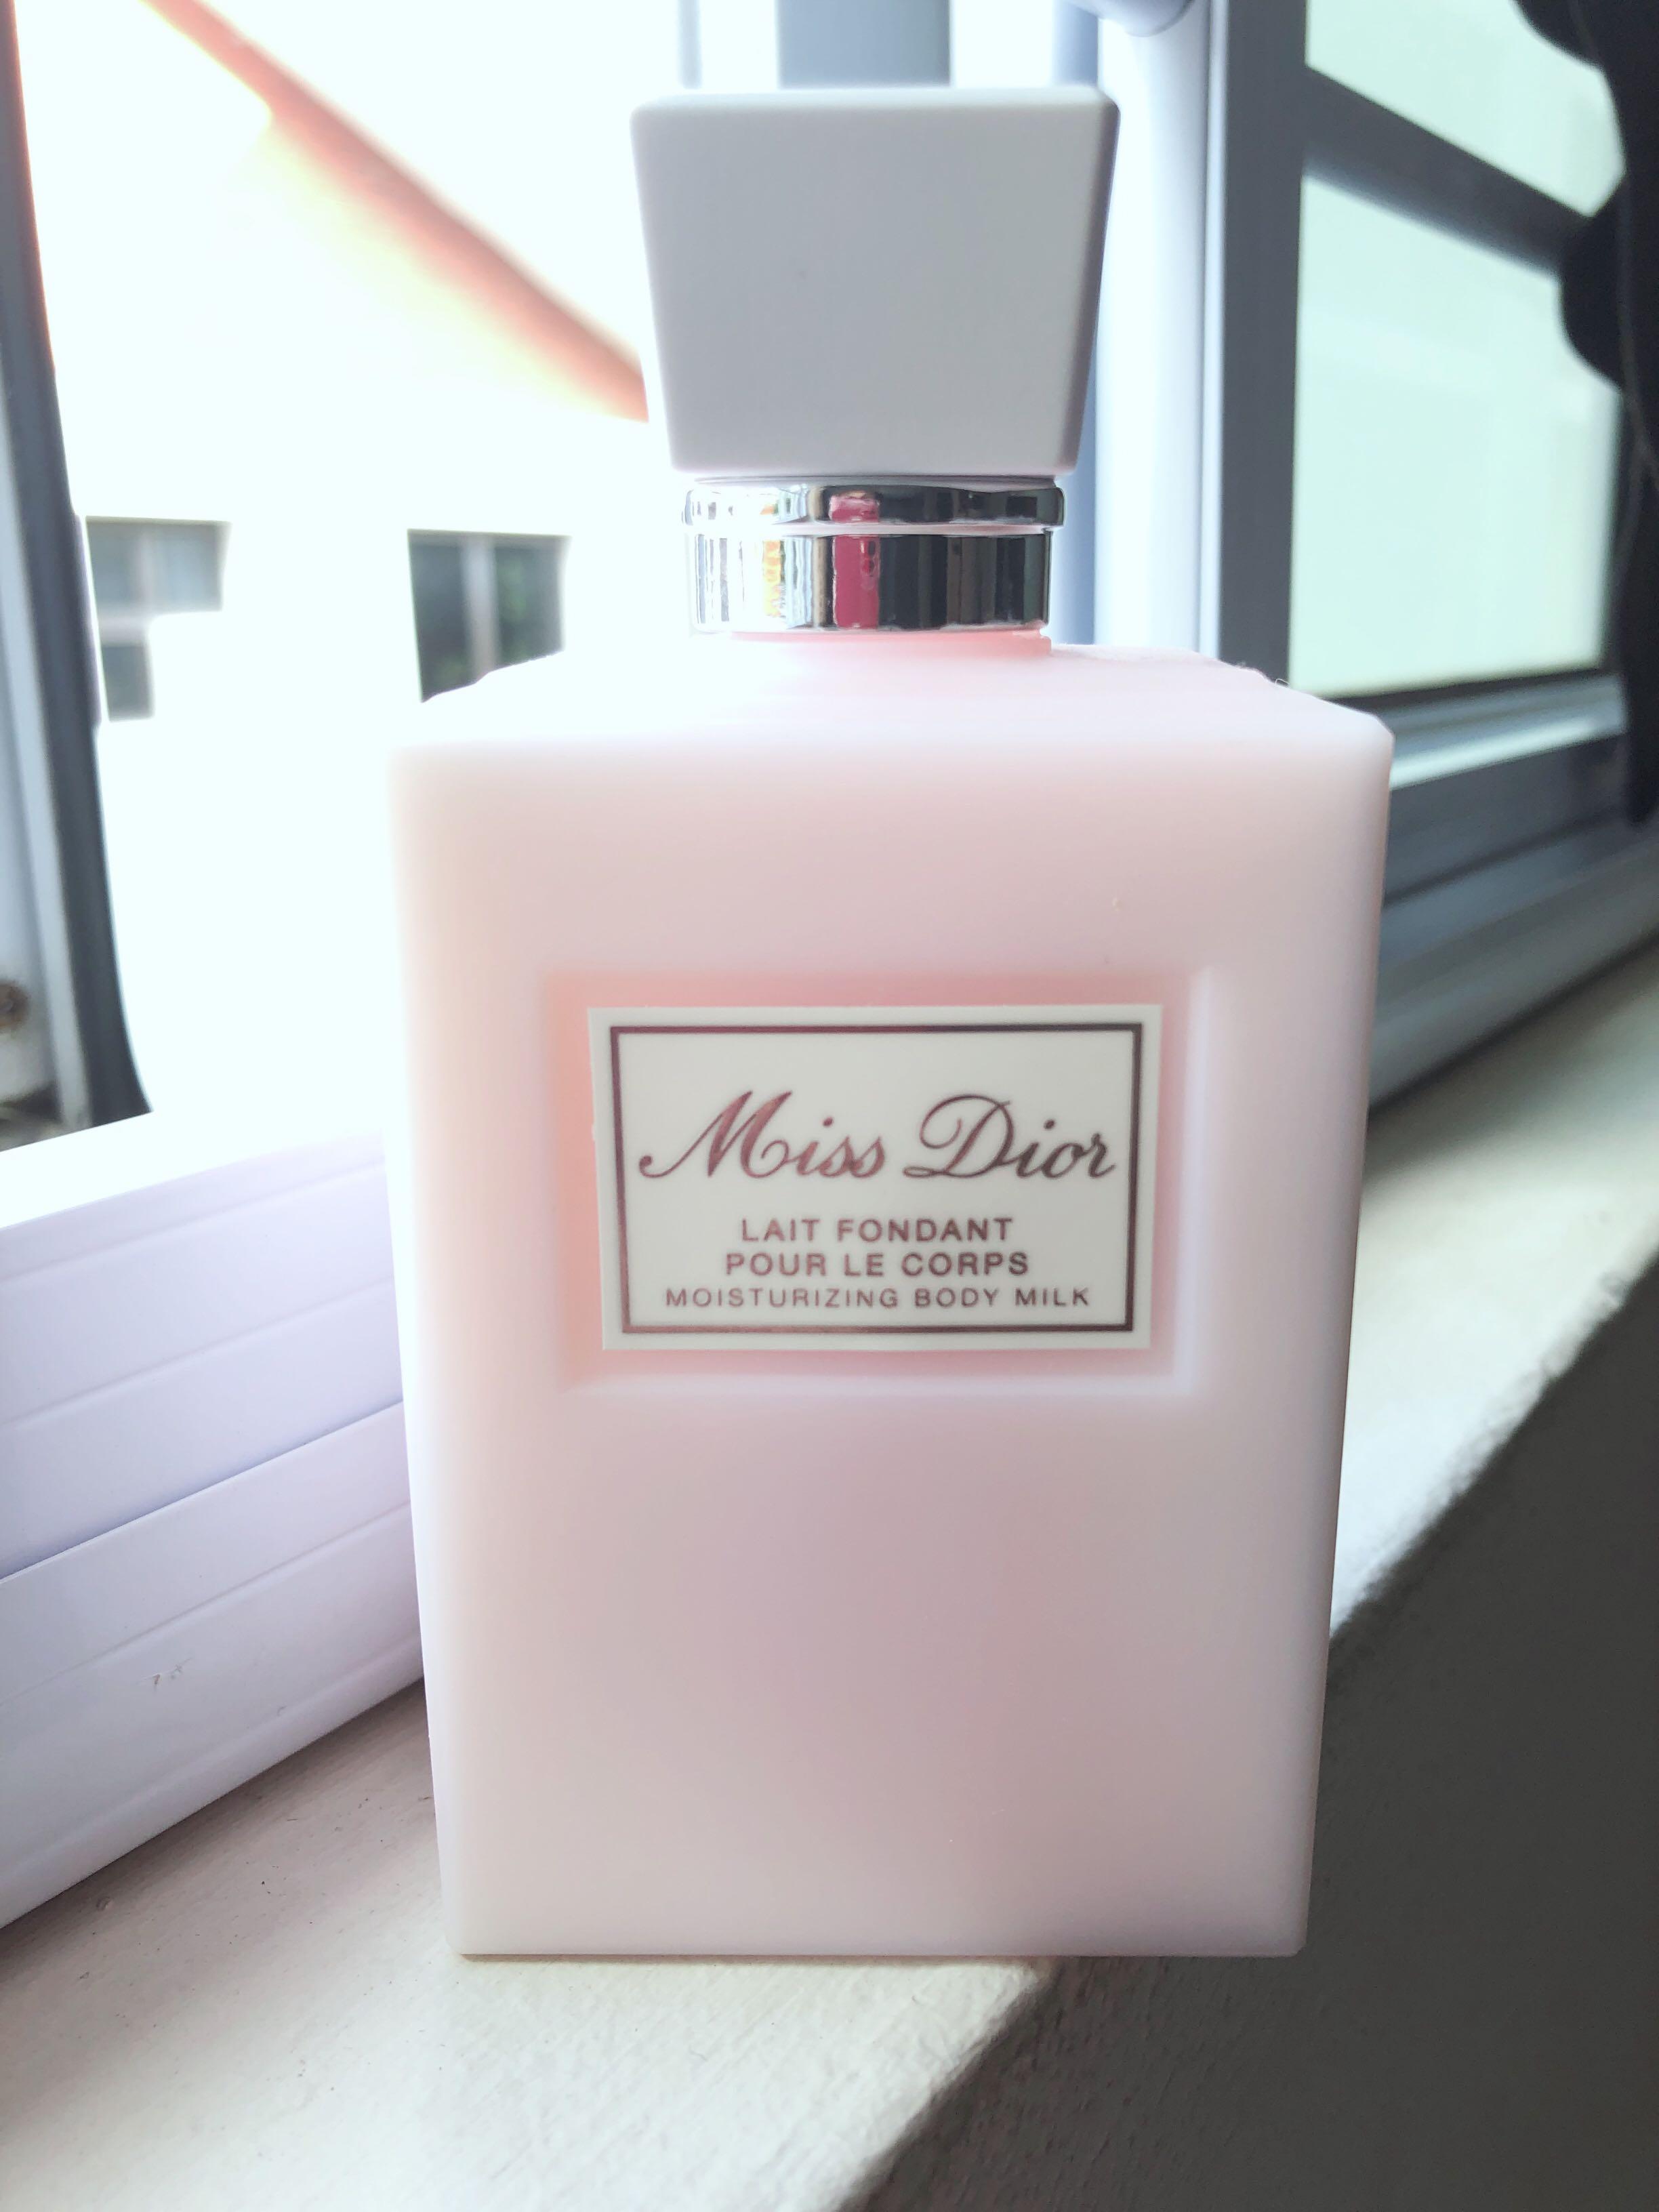 miss dior lait fondant moisturizing body milk